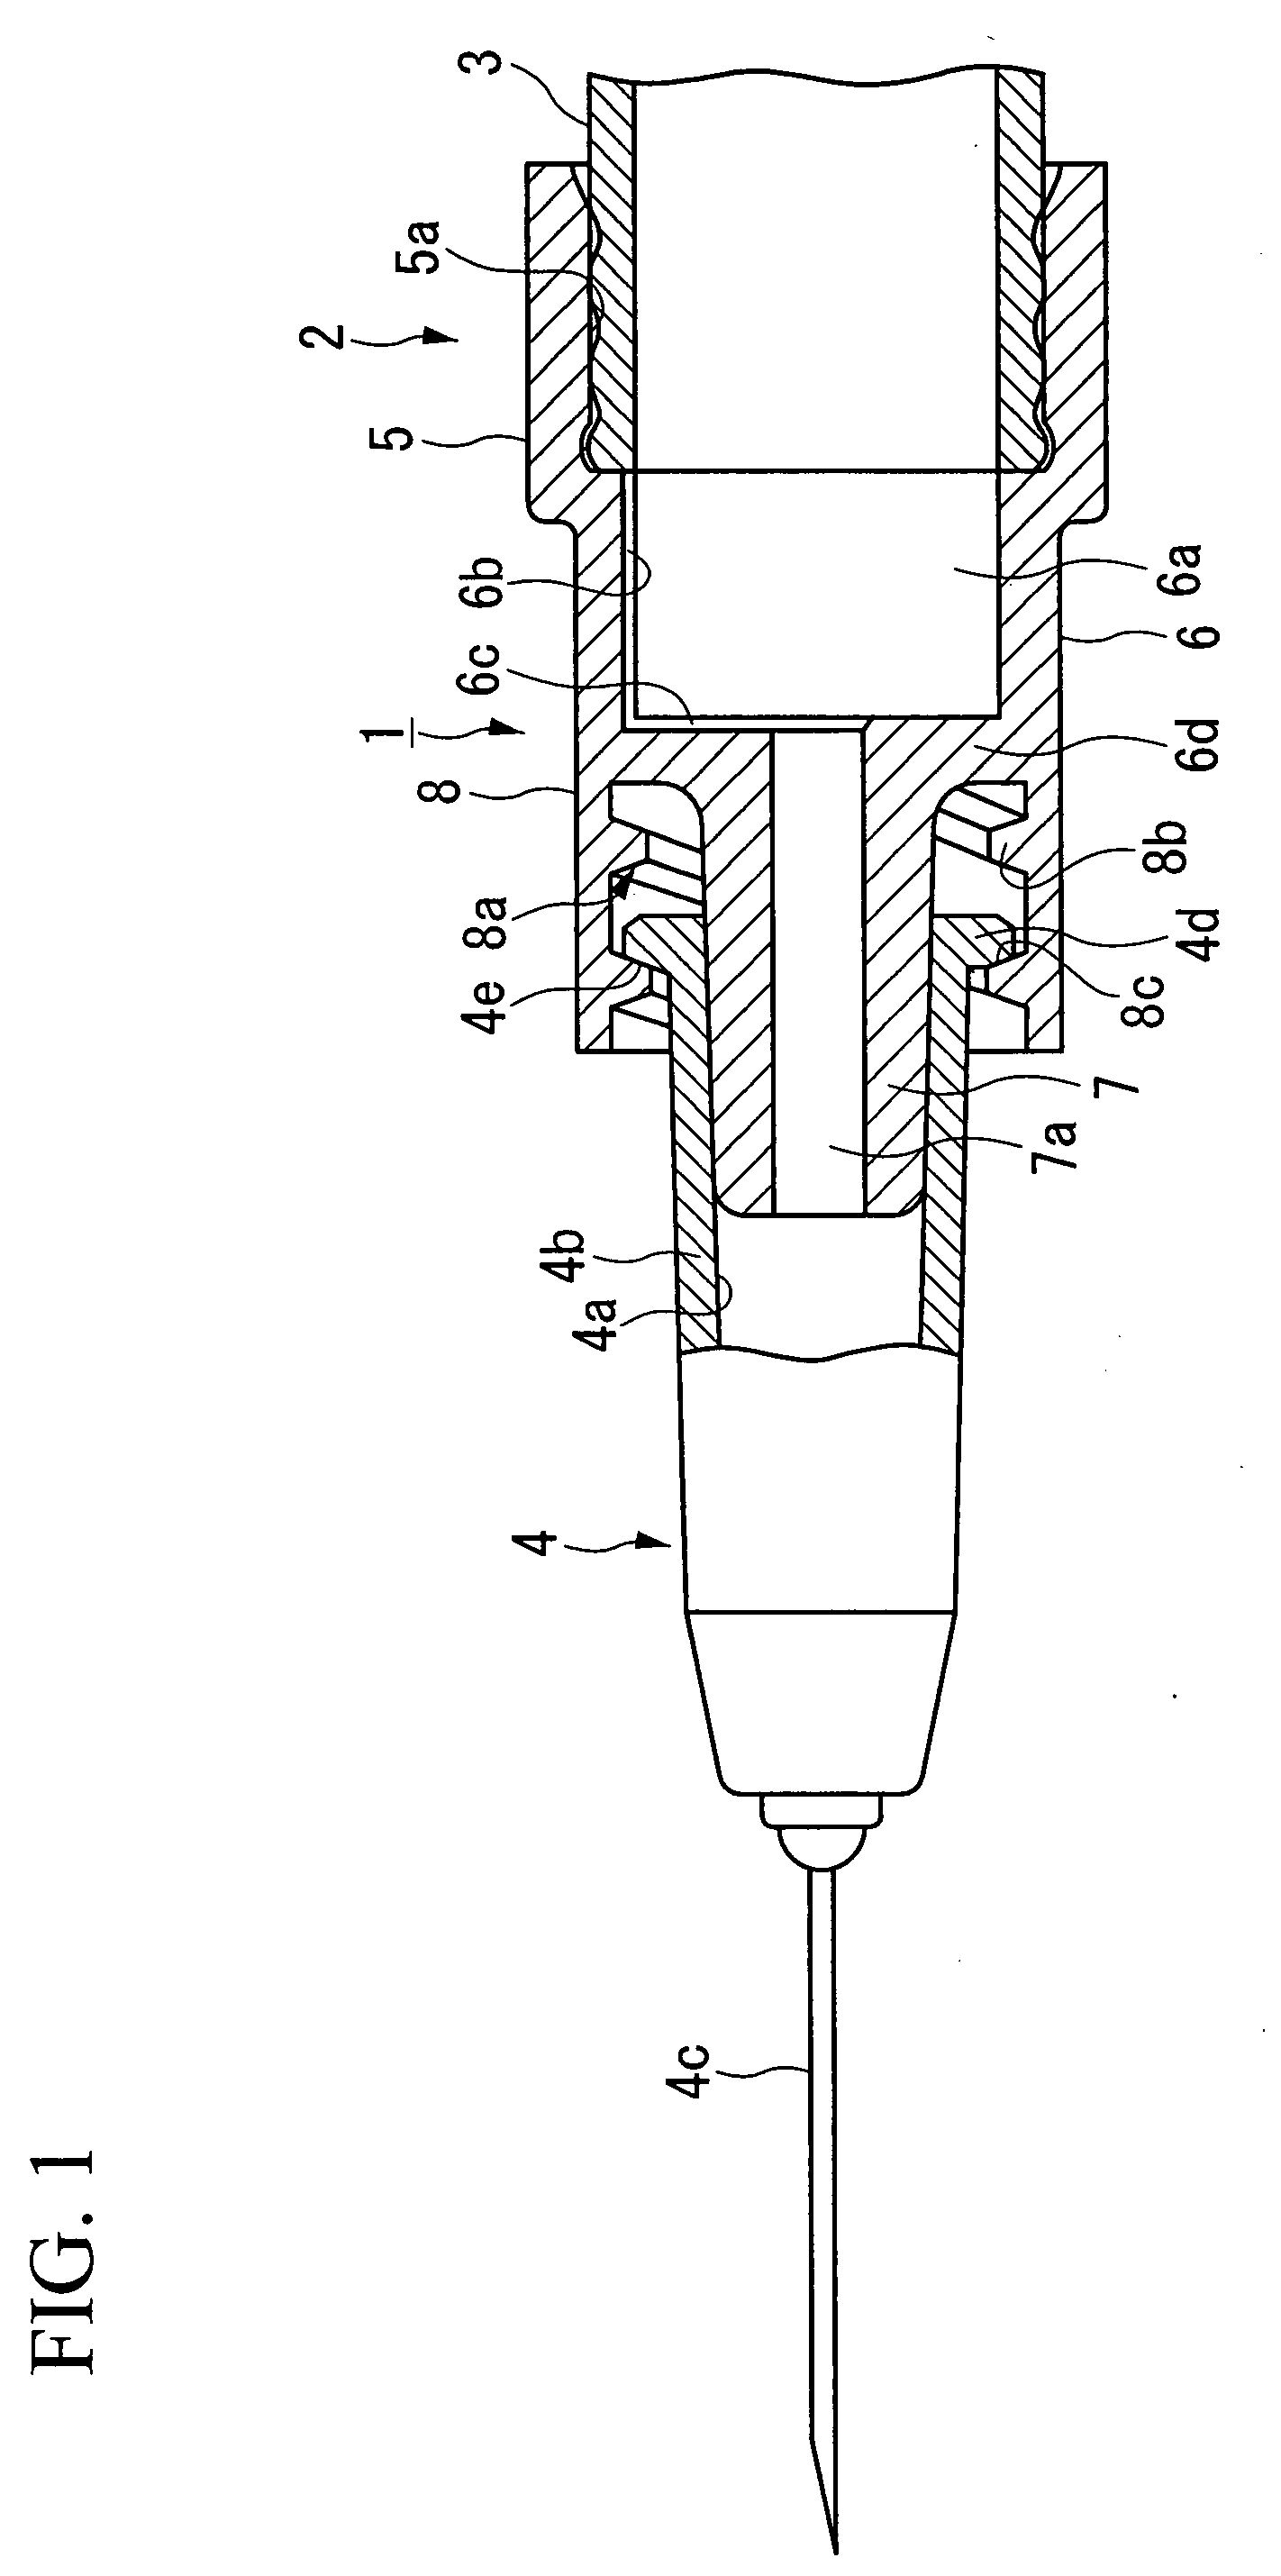 Luer-lock type cykindrical tip of syringe